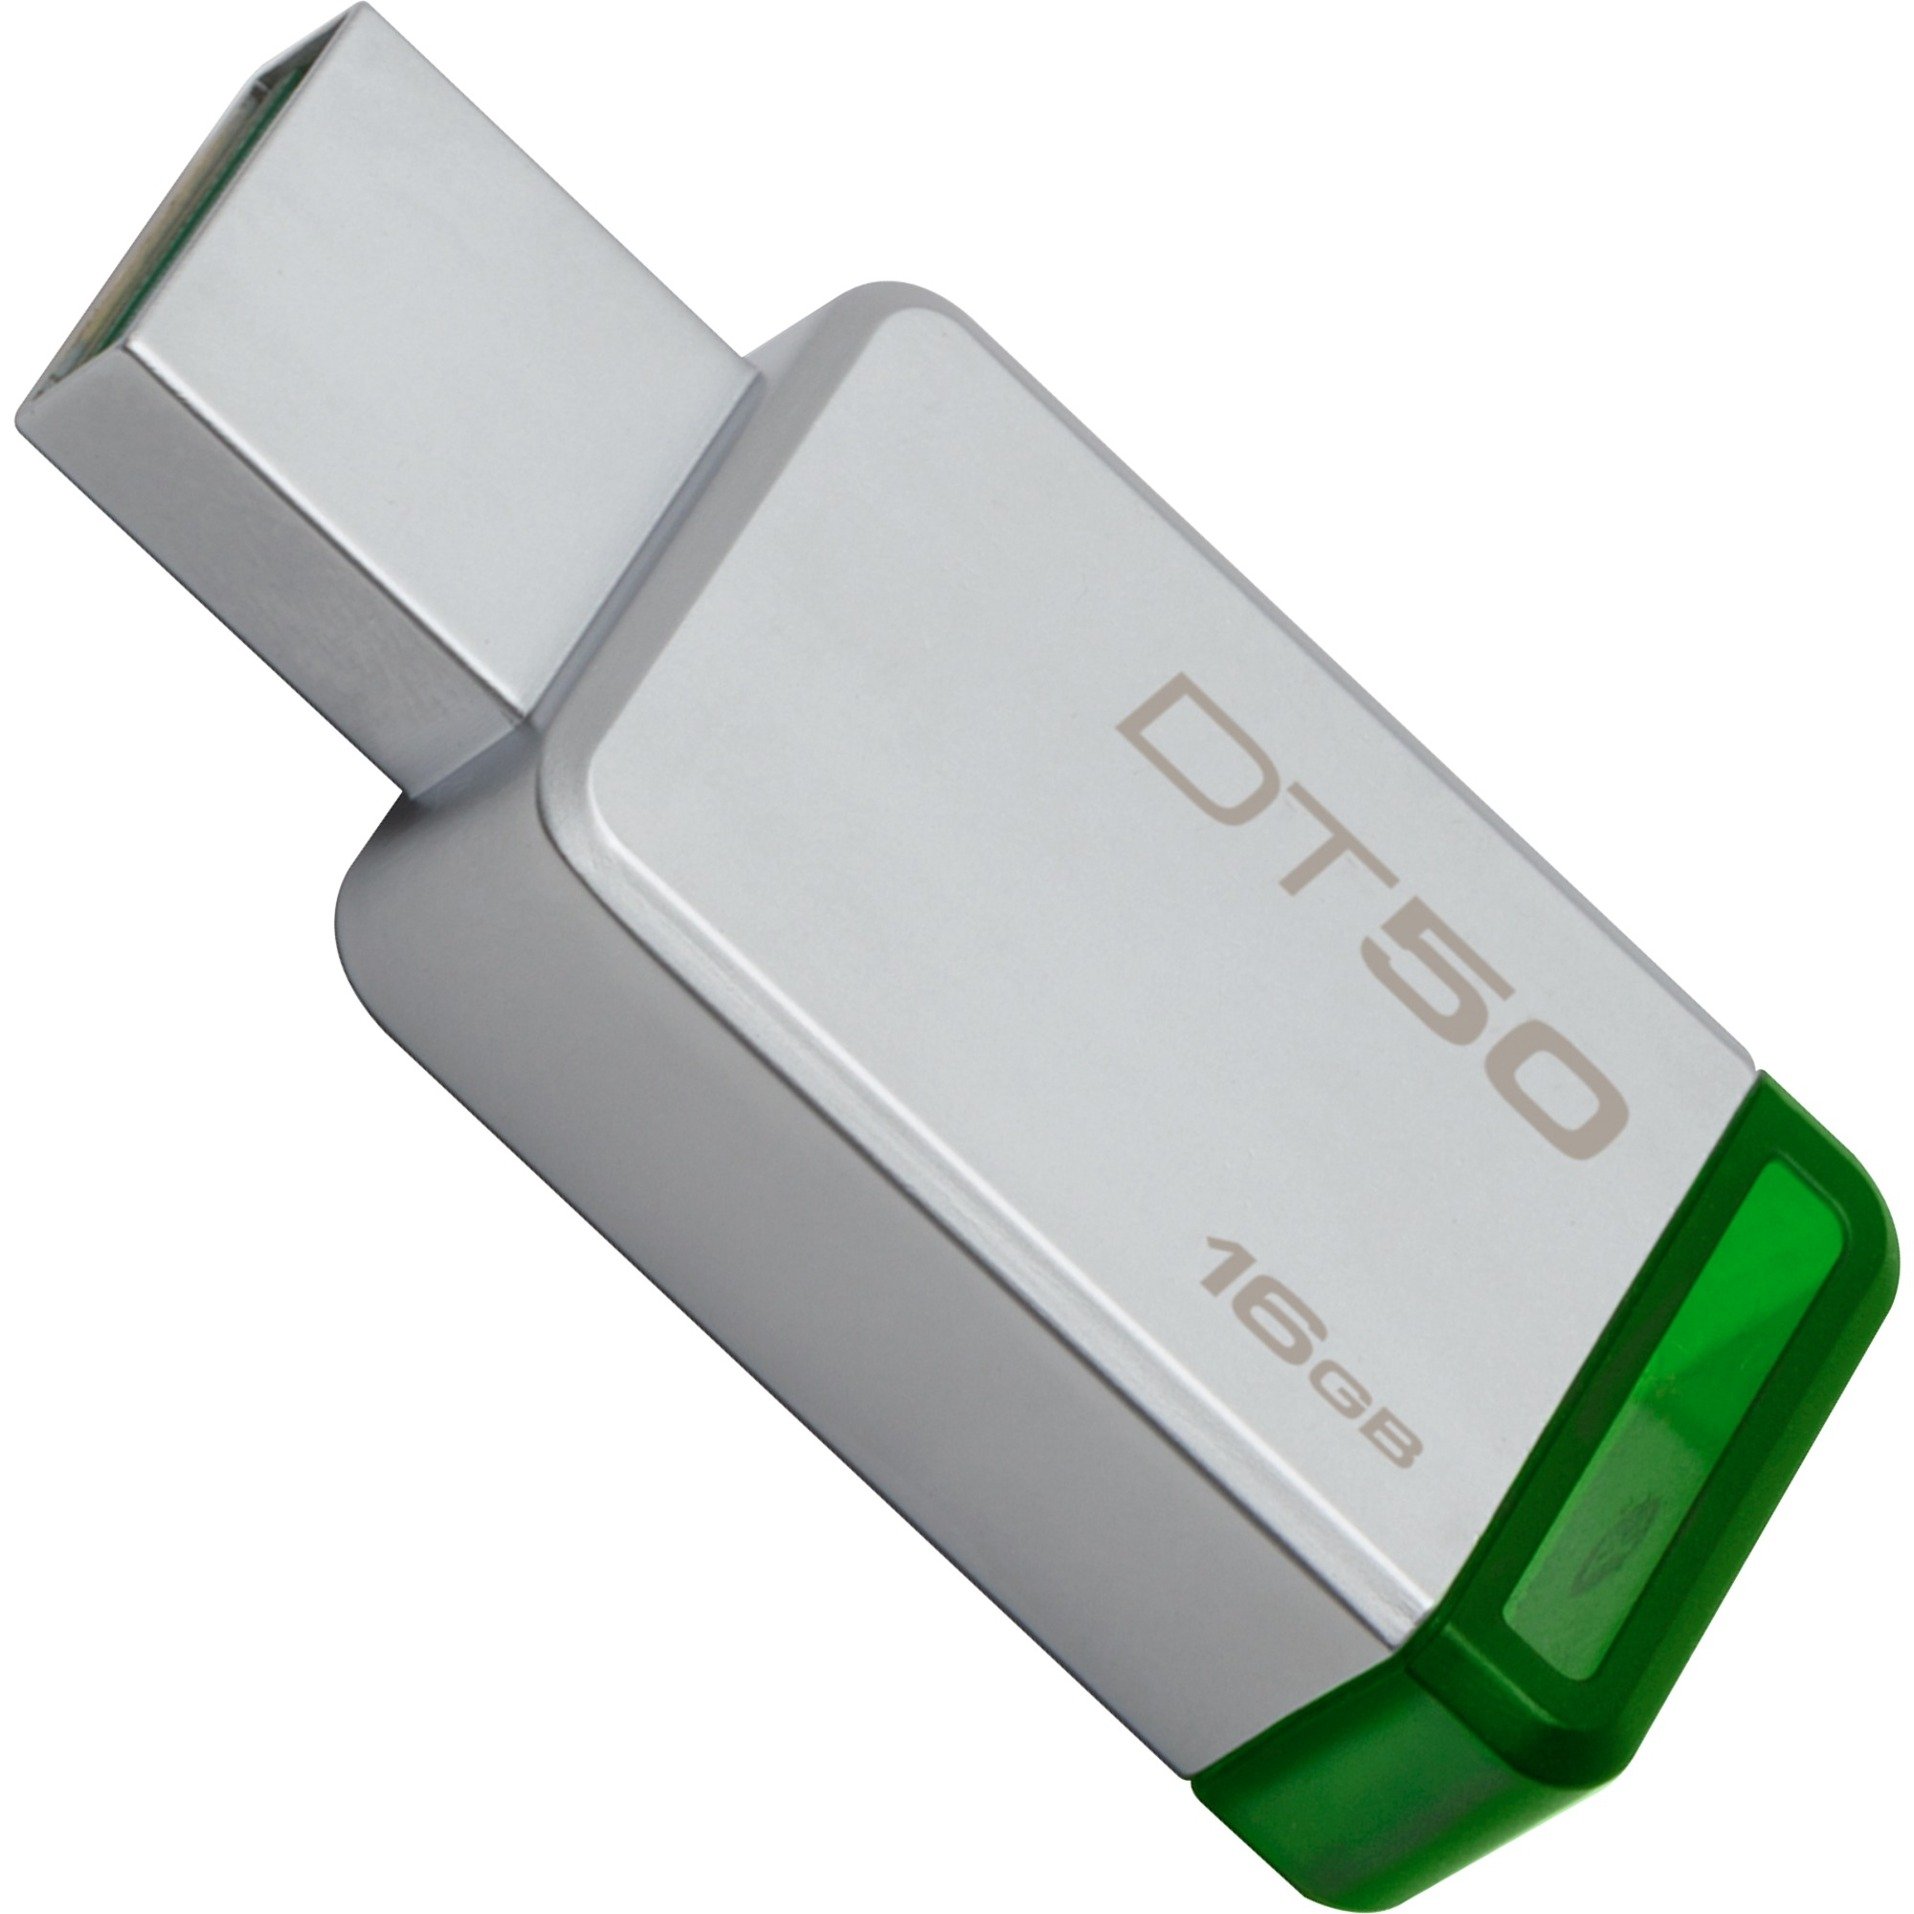 DataTraveler 50 16GB pami?? USB 3.0 (3.1 Gen 1) Z??cze USB typu A Zielony, Srebrny, No?nik Pendrive USB